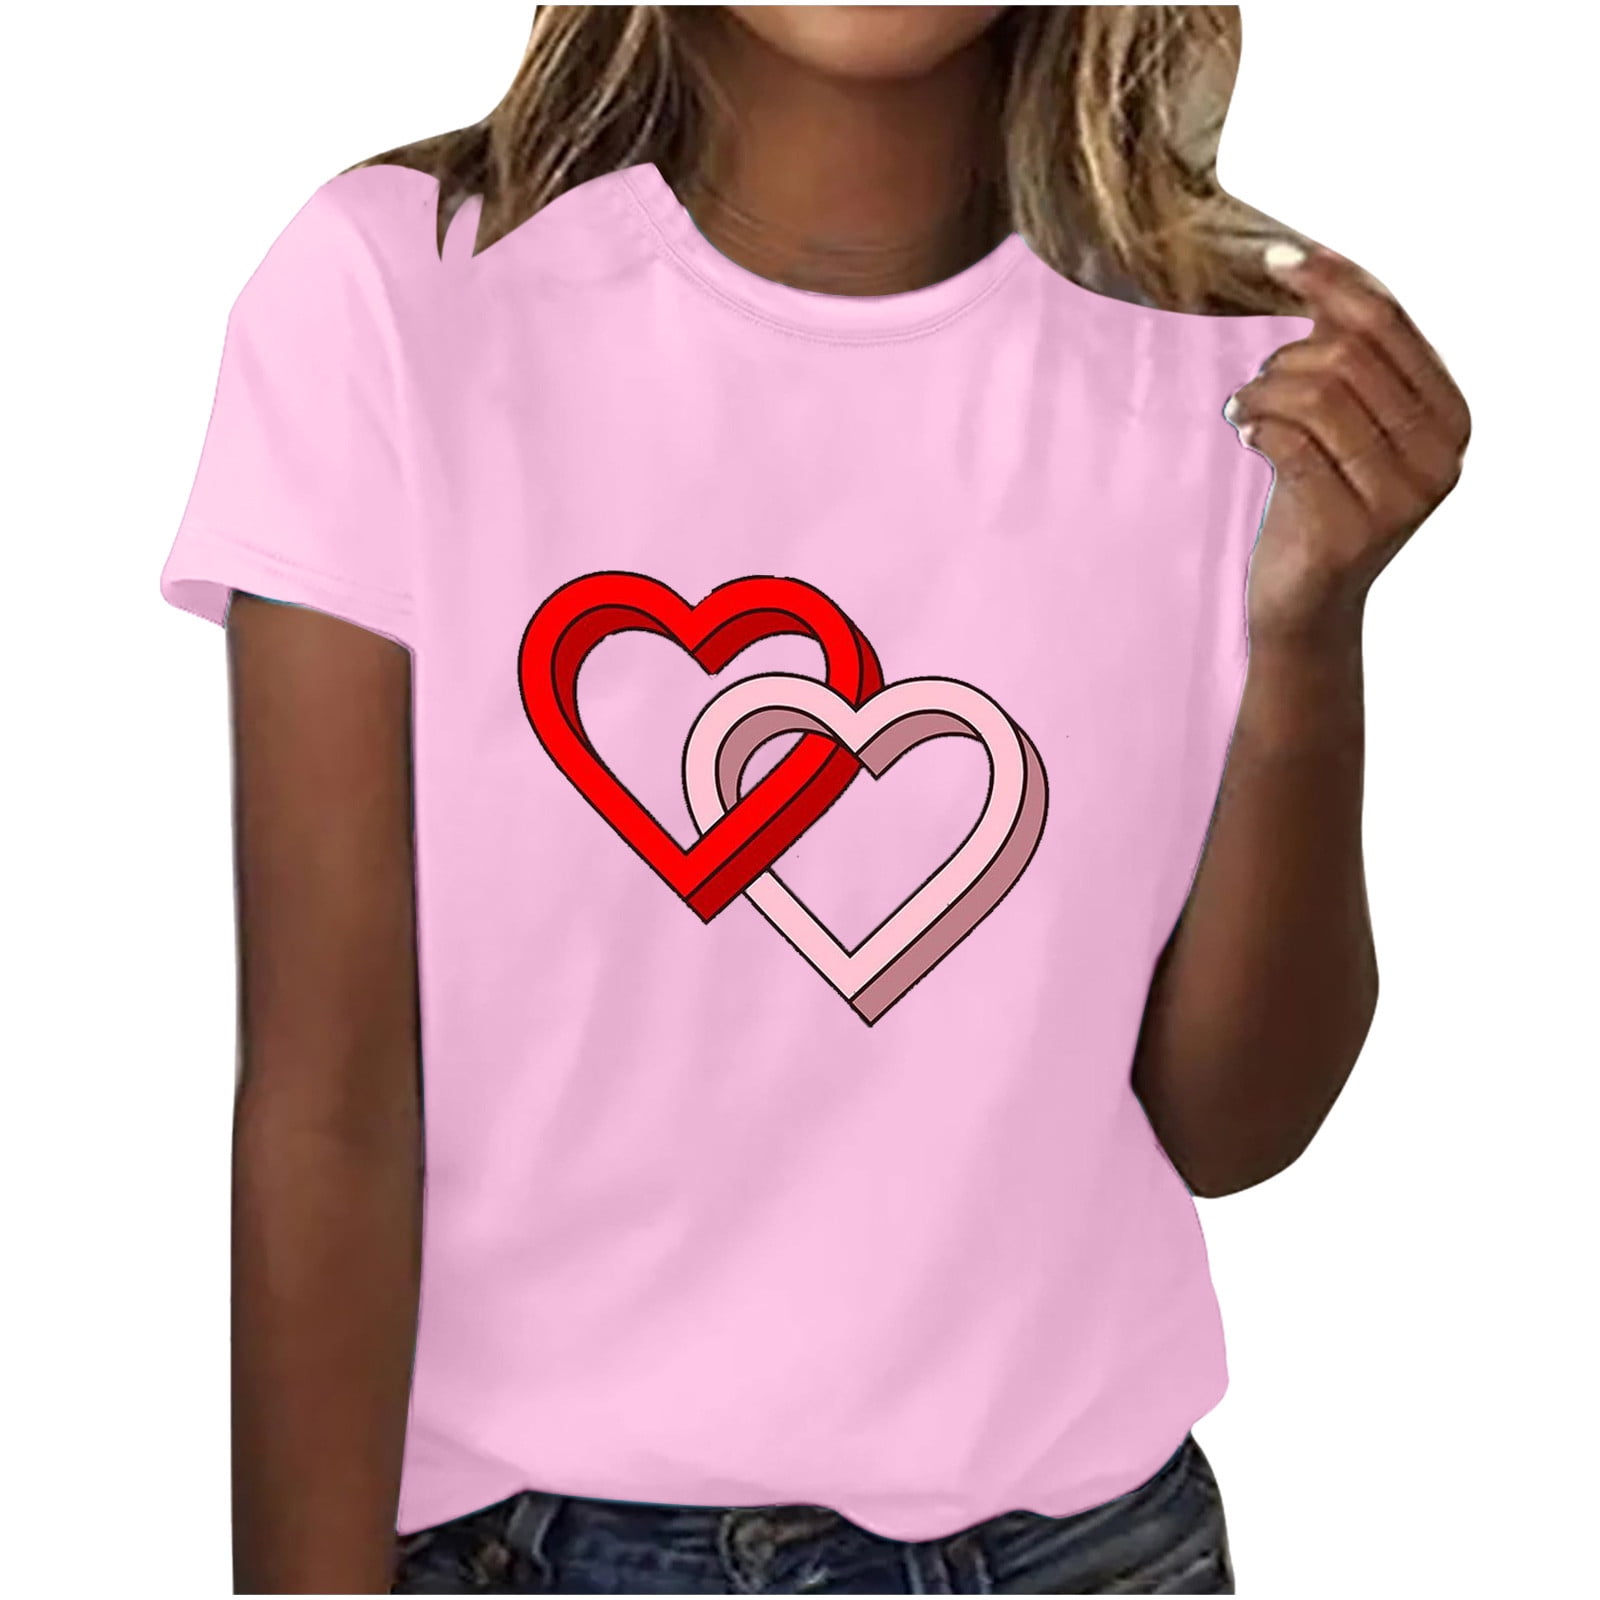 tklpehg valentine shirts for women Short Sleeve Soft Shirts Heart